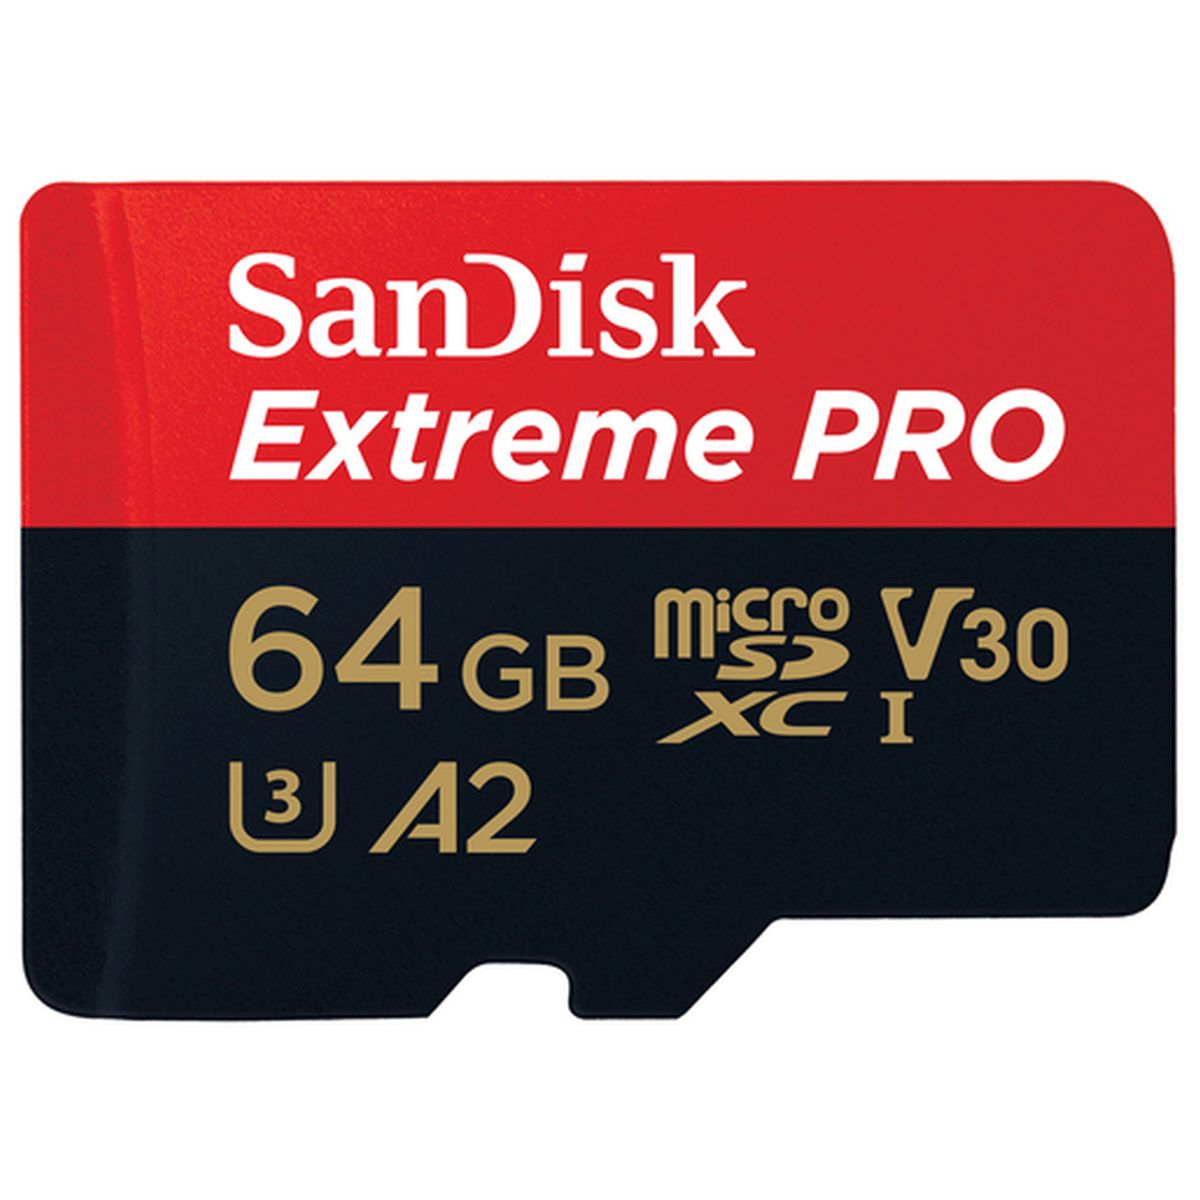 SanDisk Extreme Pro 64 GB 200 MB/s micro